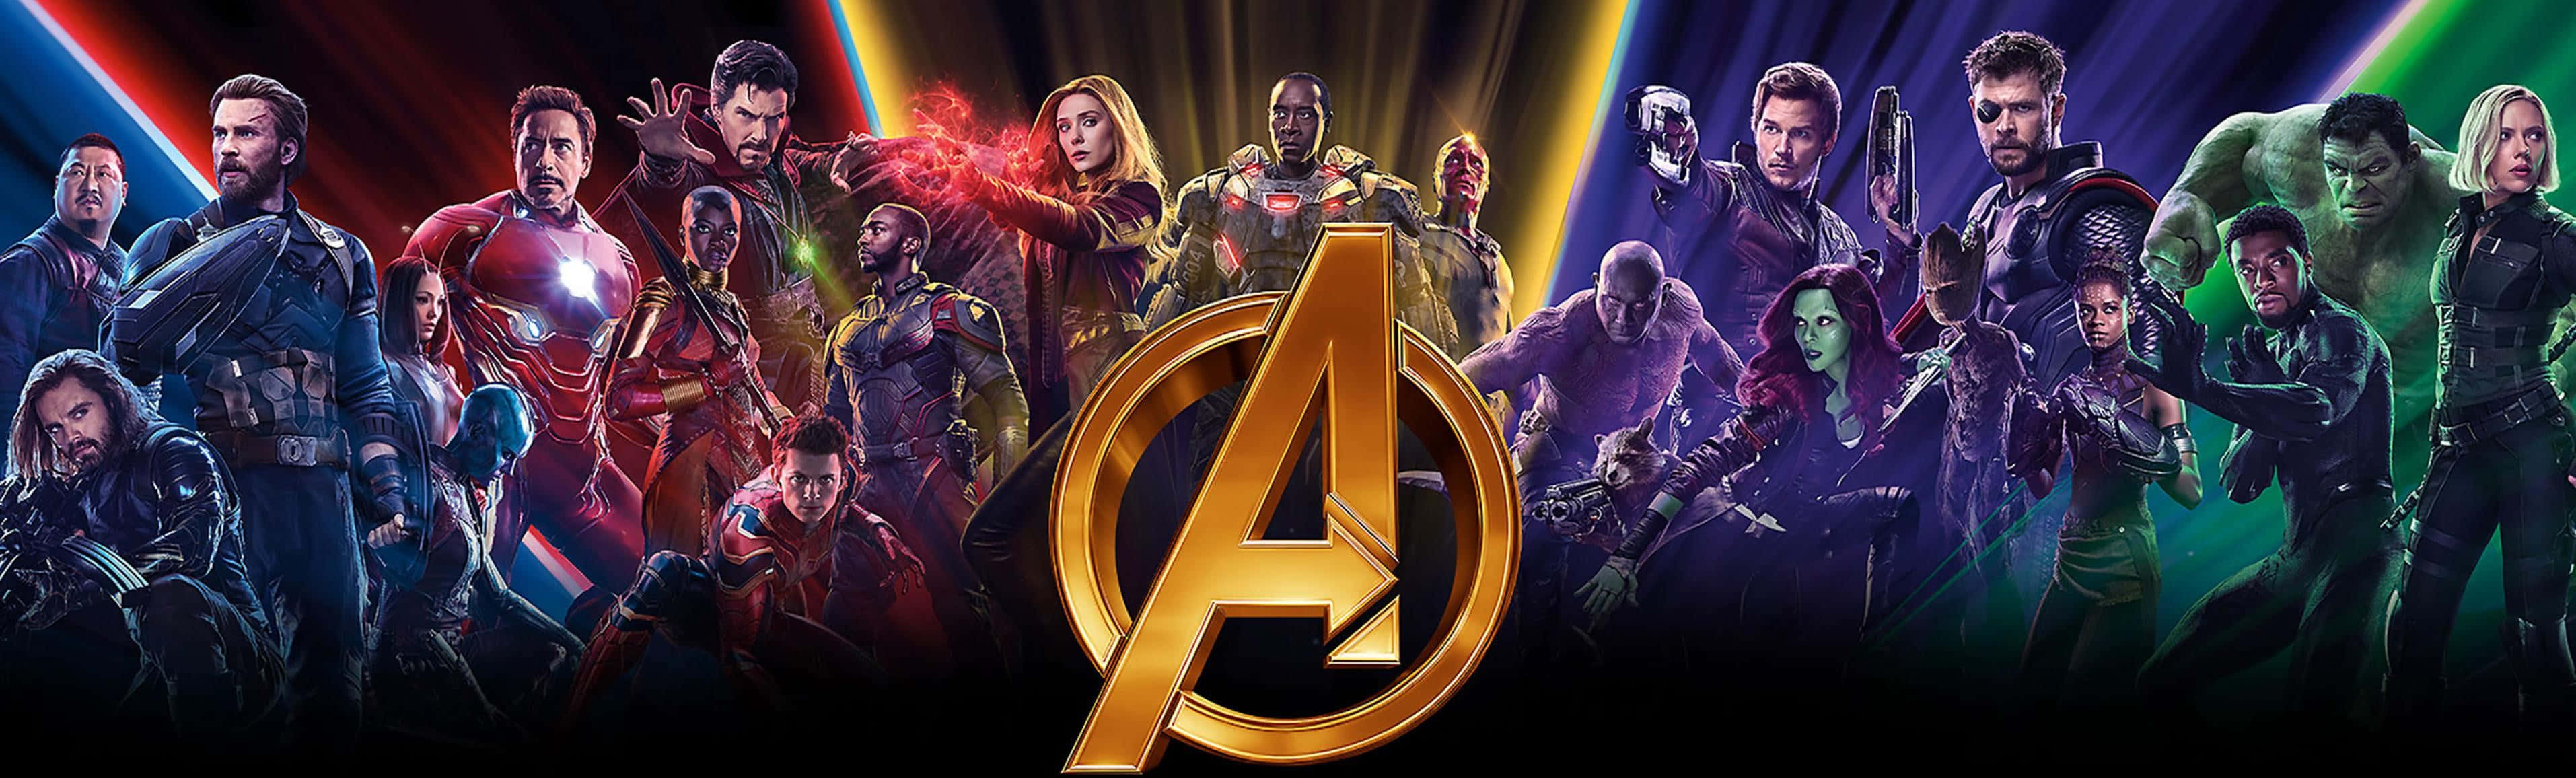 Dope Avengers Characters Panoramic Poster Wallpaper